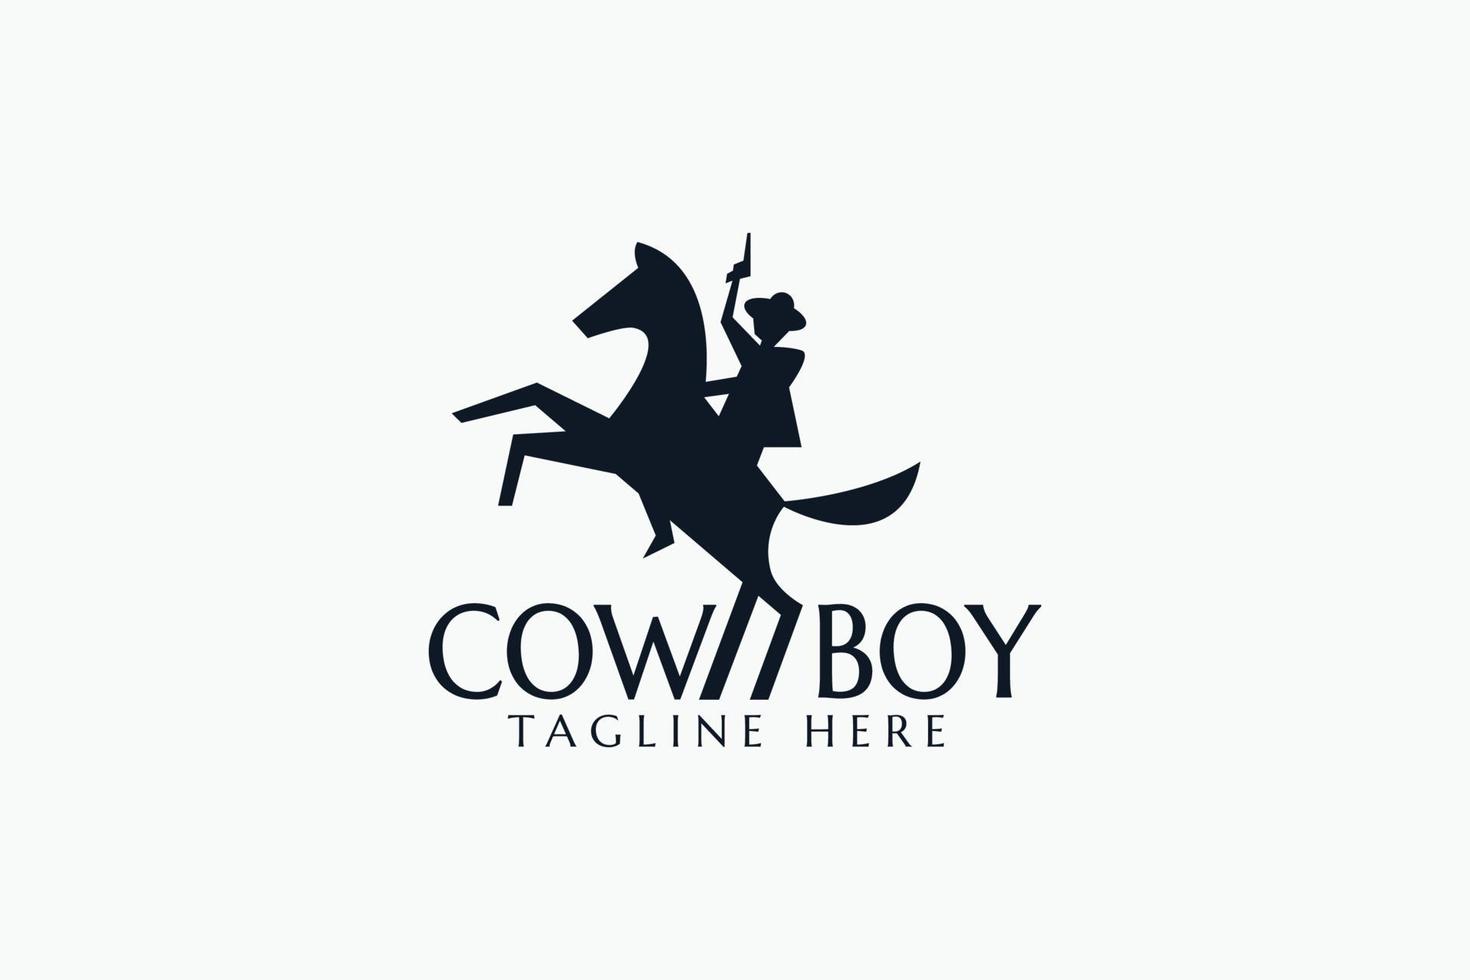 stampa logo cowboy con un uomo a cavallo con una pistola. vettore